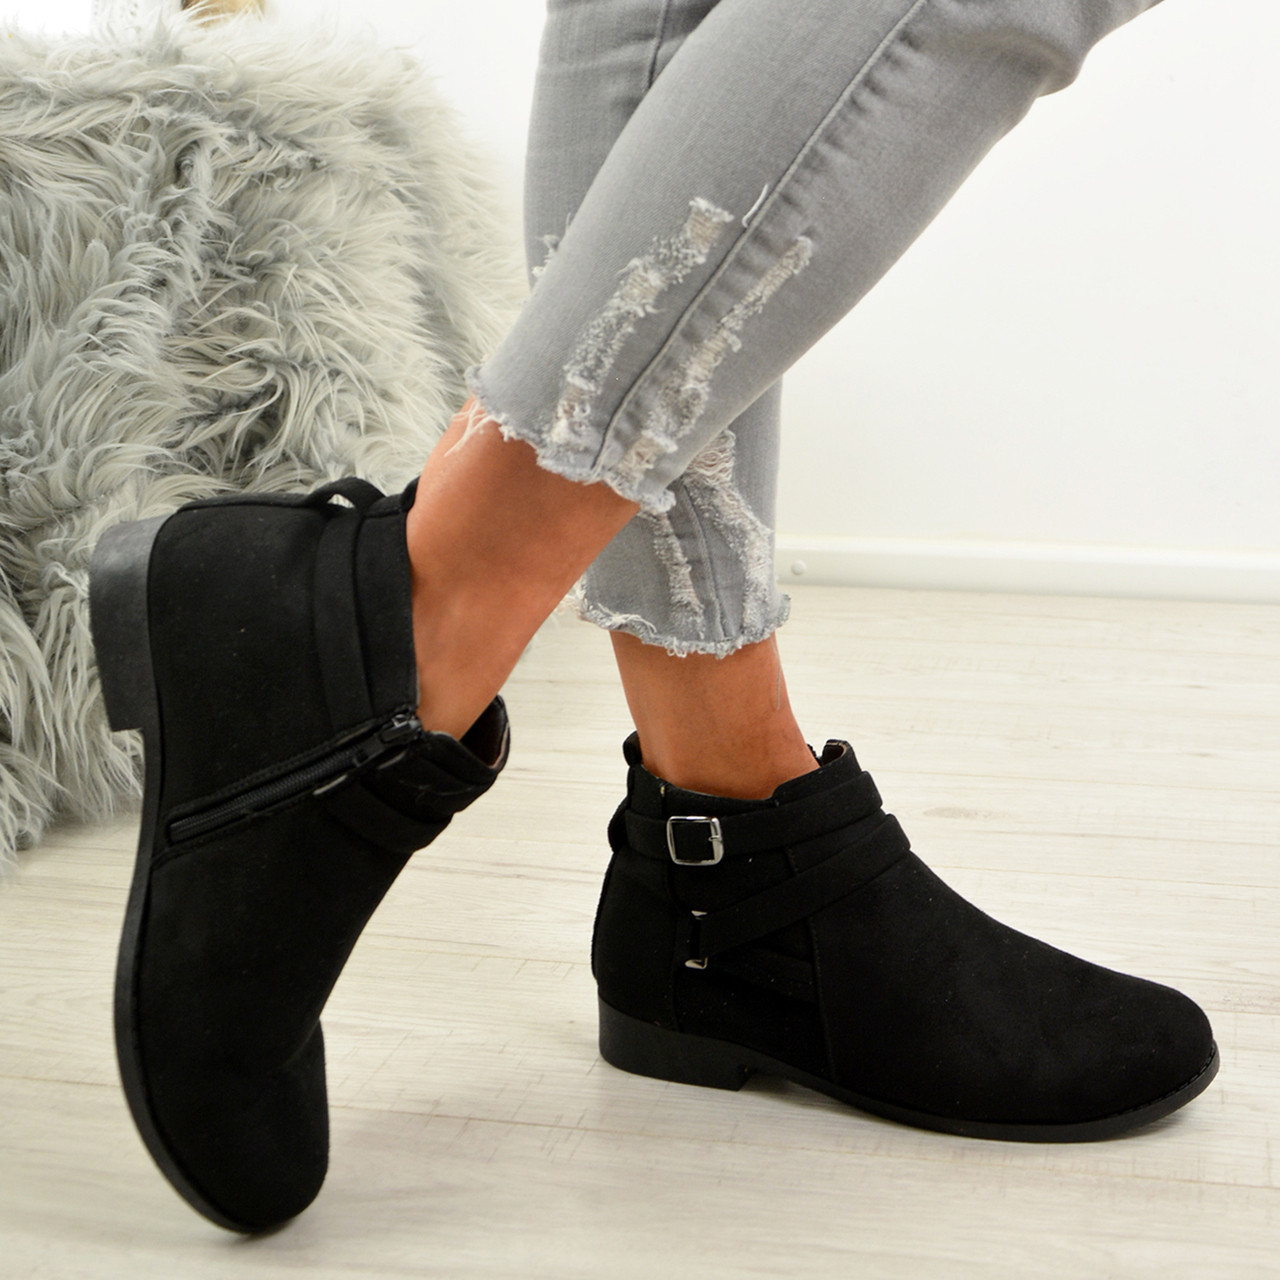 ladies black ankle boots uk